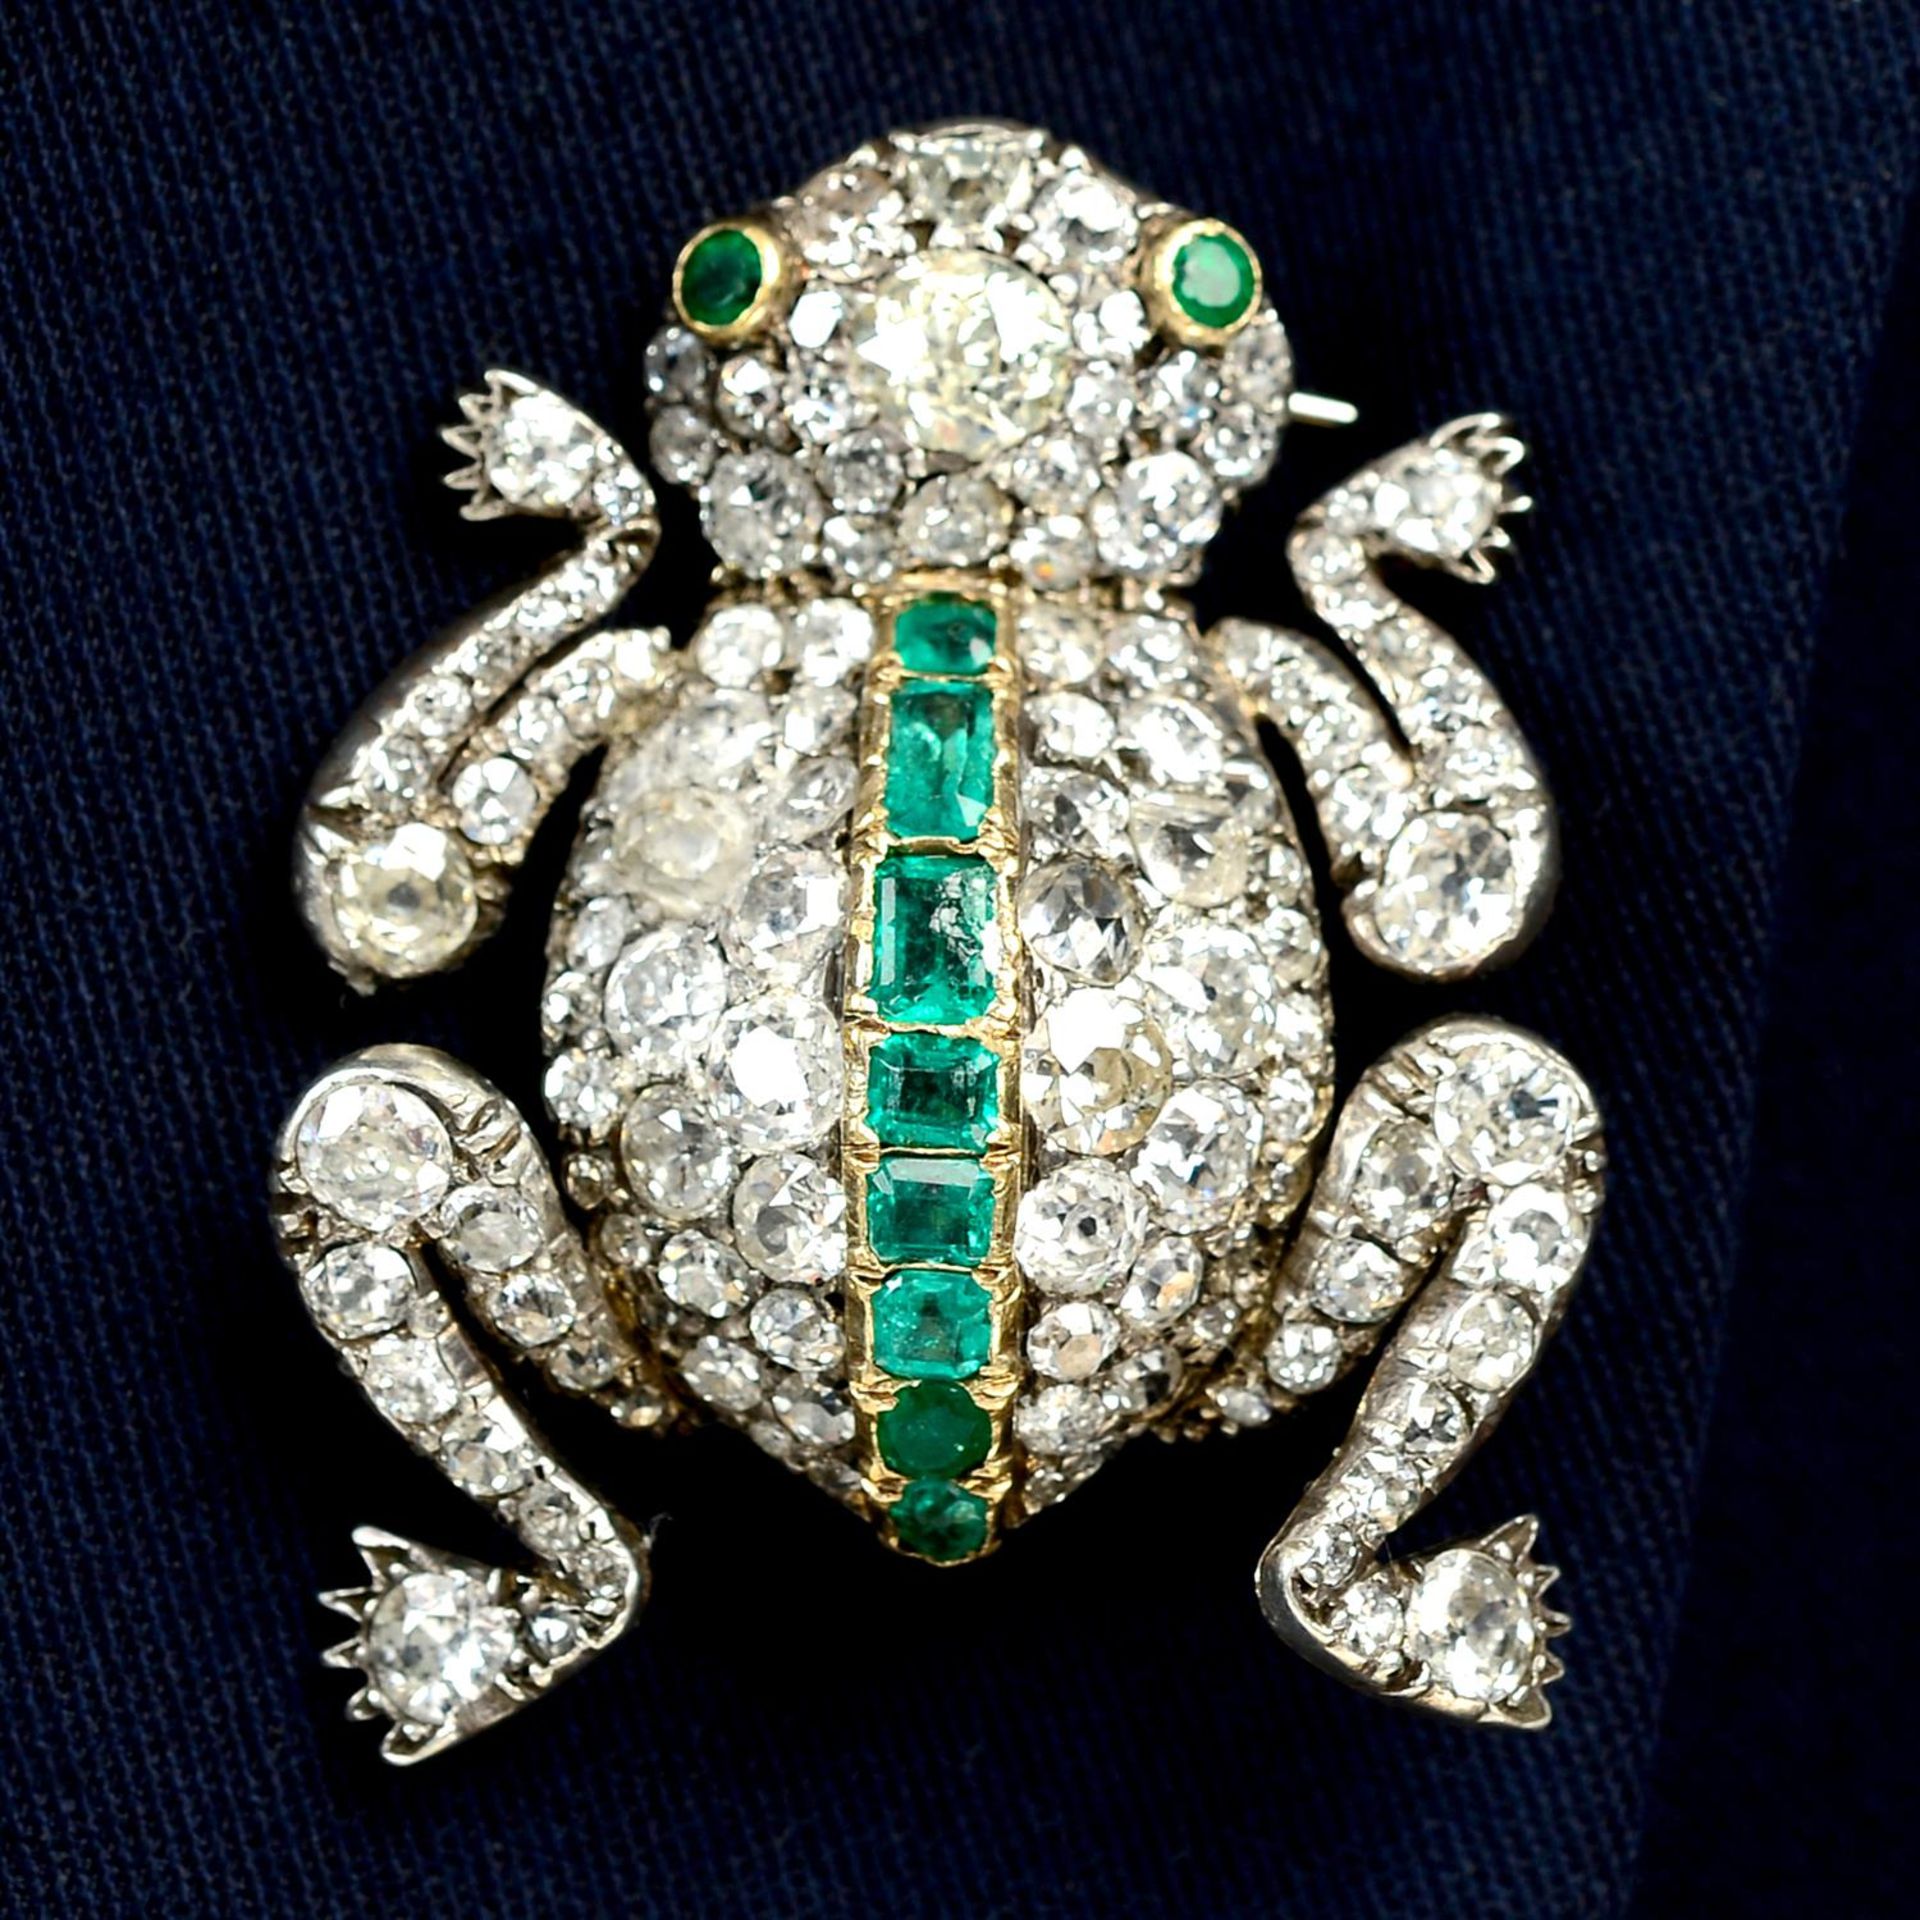 An early 20th century vari-cut diamond and emerald frog brooch.